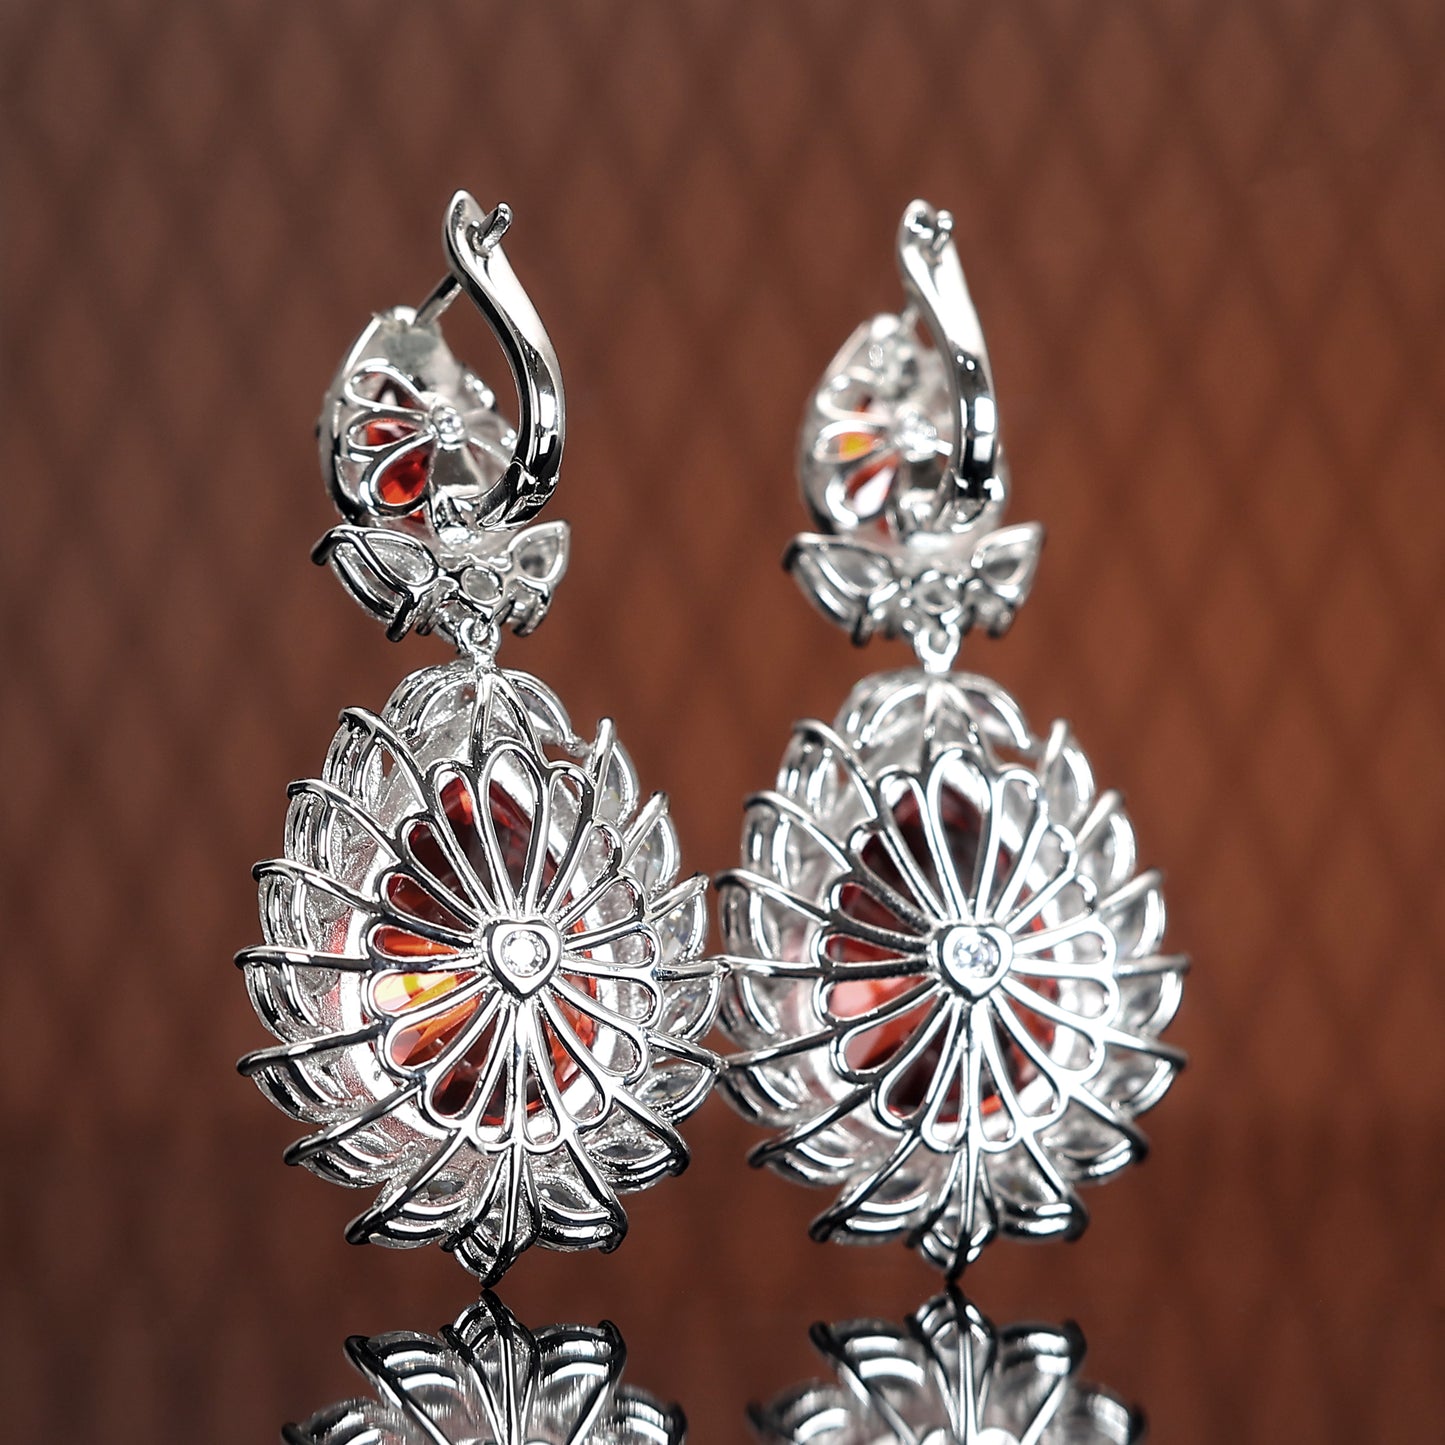 Micro-setting Dark Fanta color Lab created stones double waterdrop fancy earrings, sterling silver